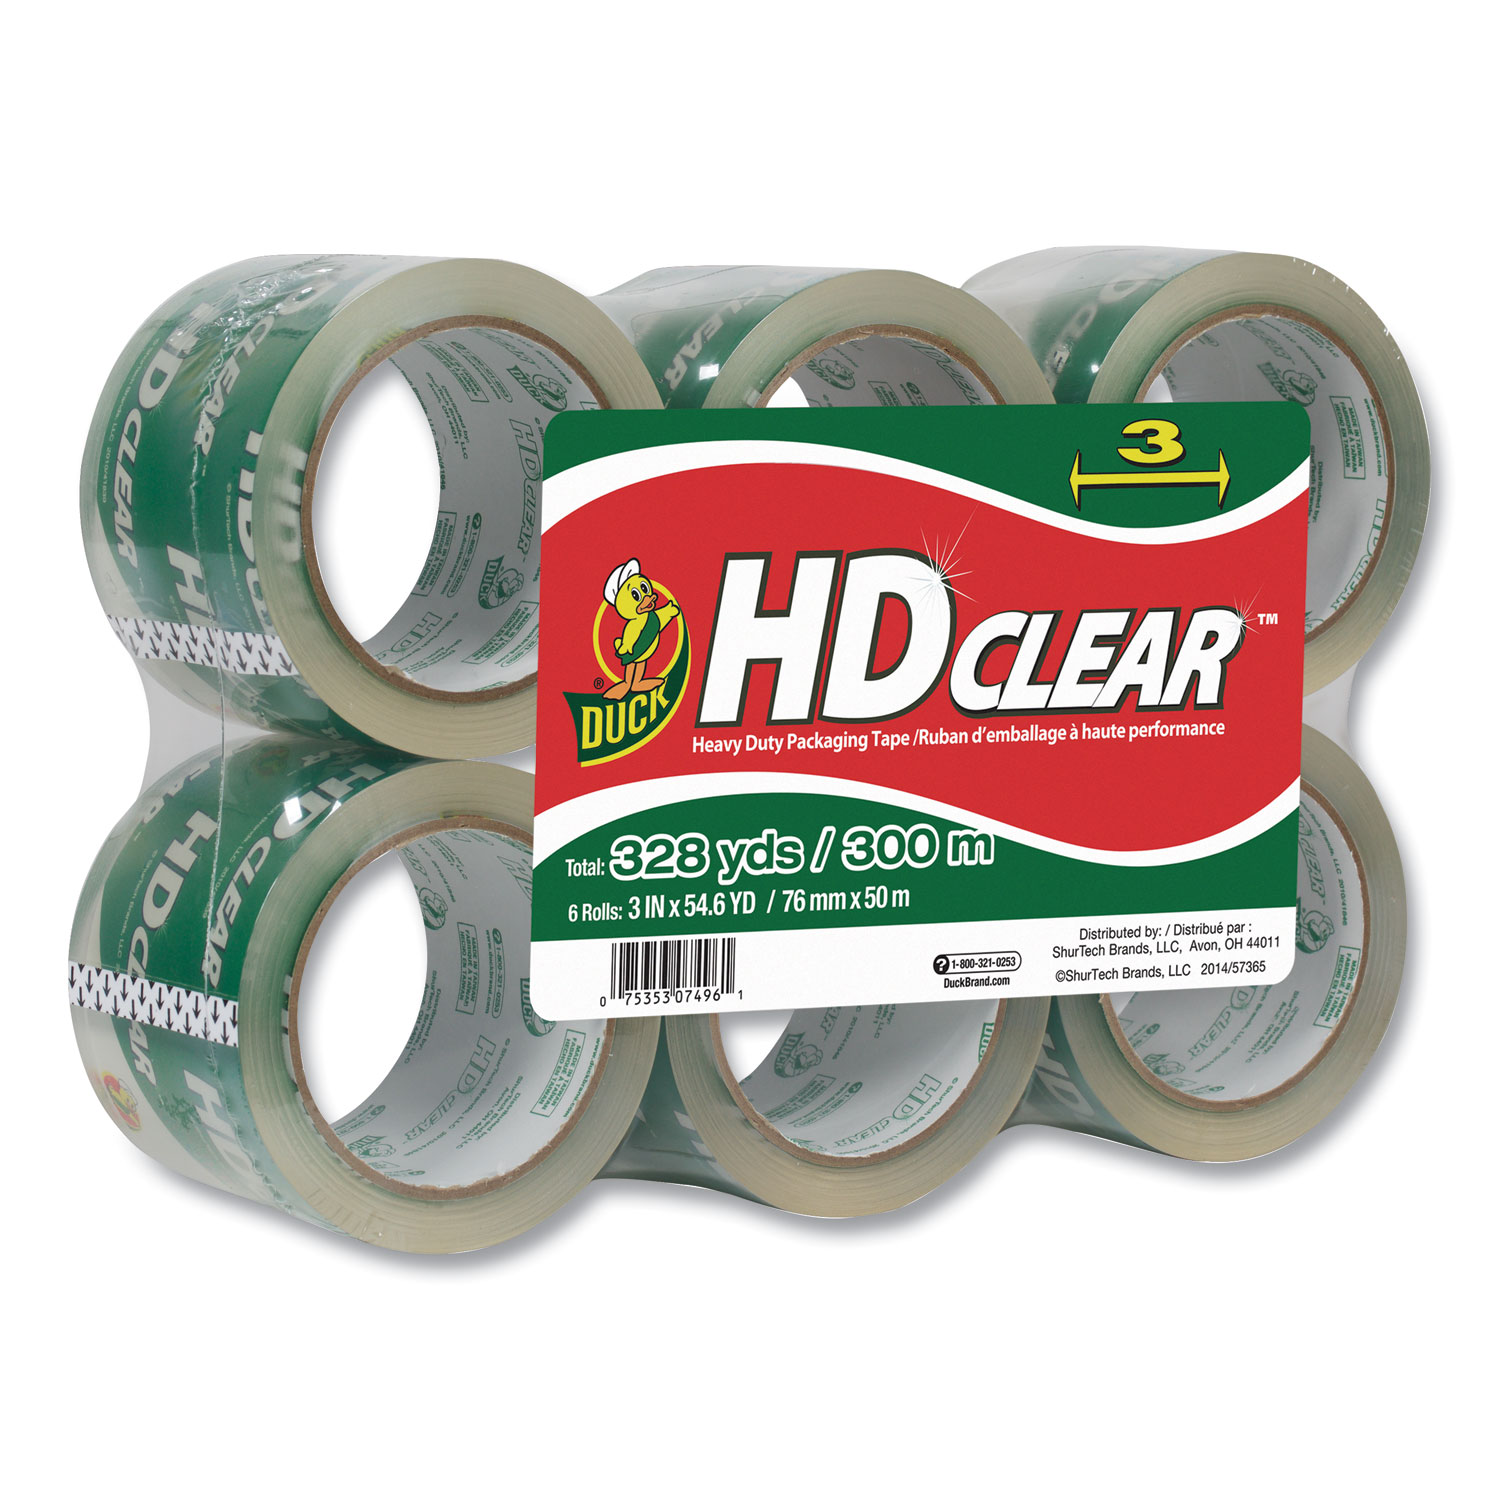  Duck 00-07496 Heavy-Duty Carton Packaging Tape, 3 Core, 3 x 54.6 yds, Clear, 6/Pack (DUC0007496) 